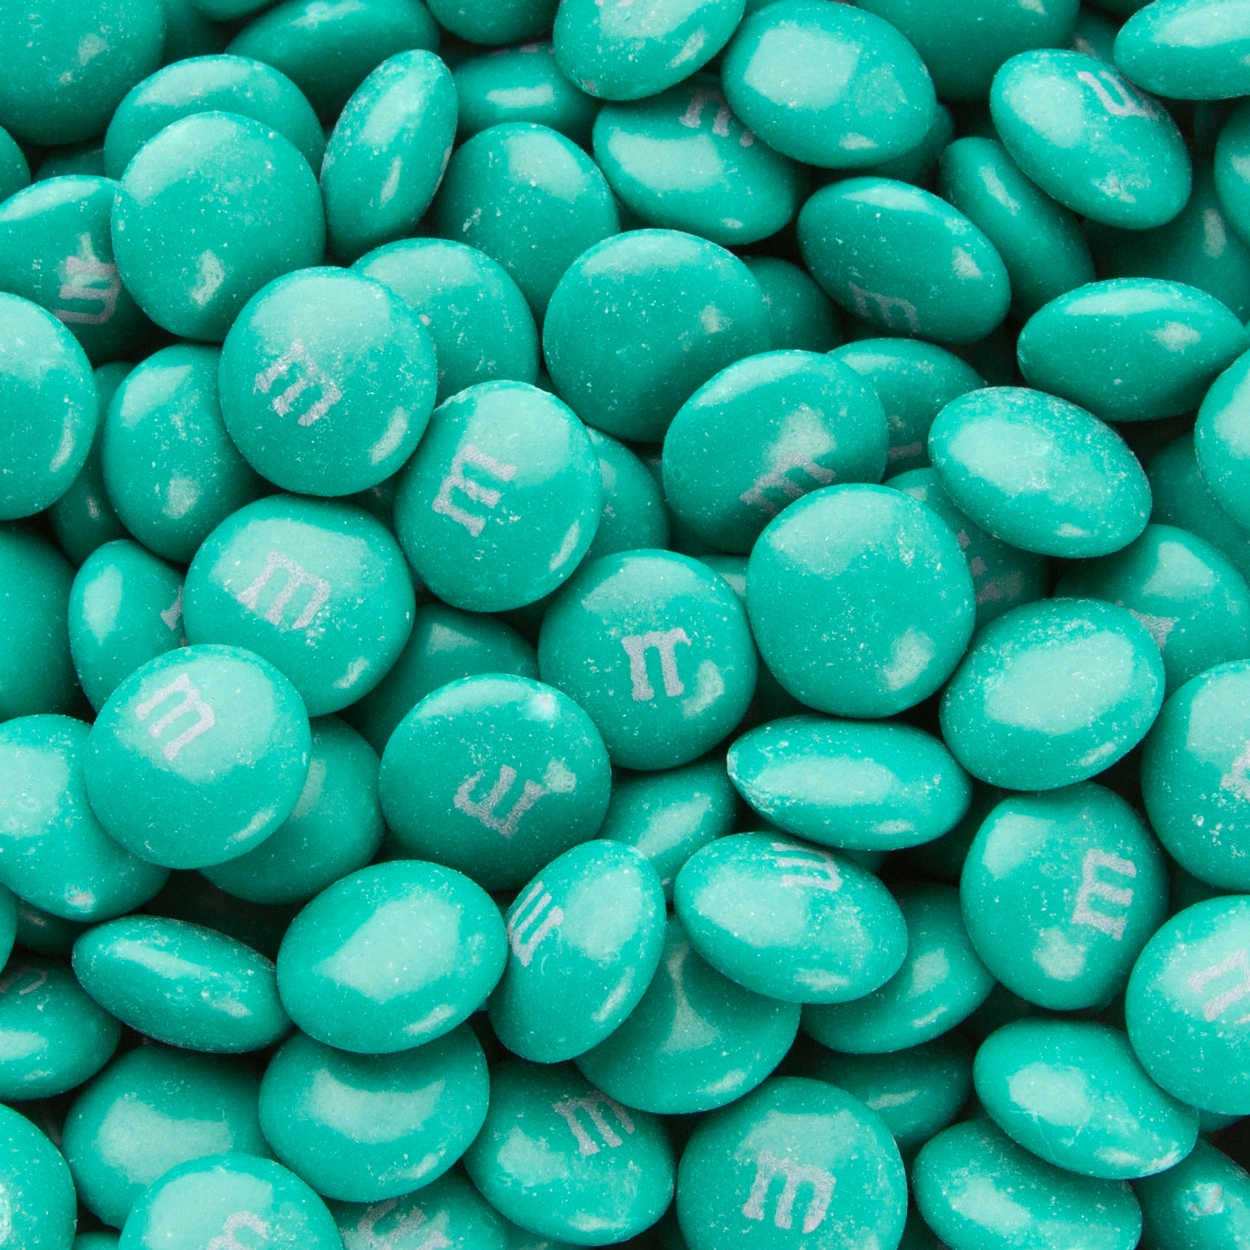 Teal M&M'S Bulk Candy